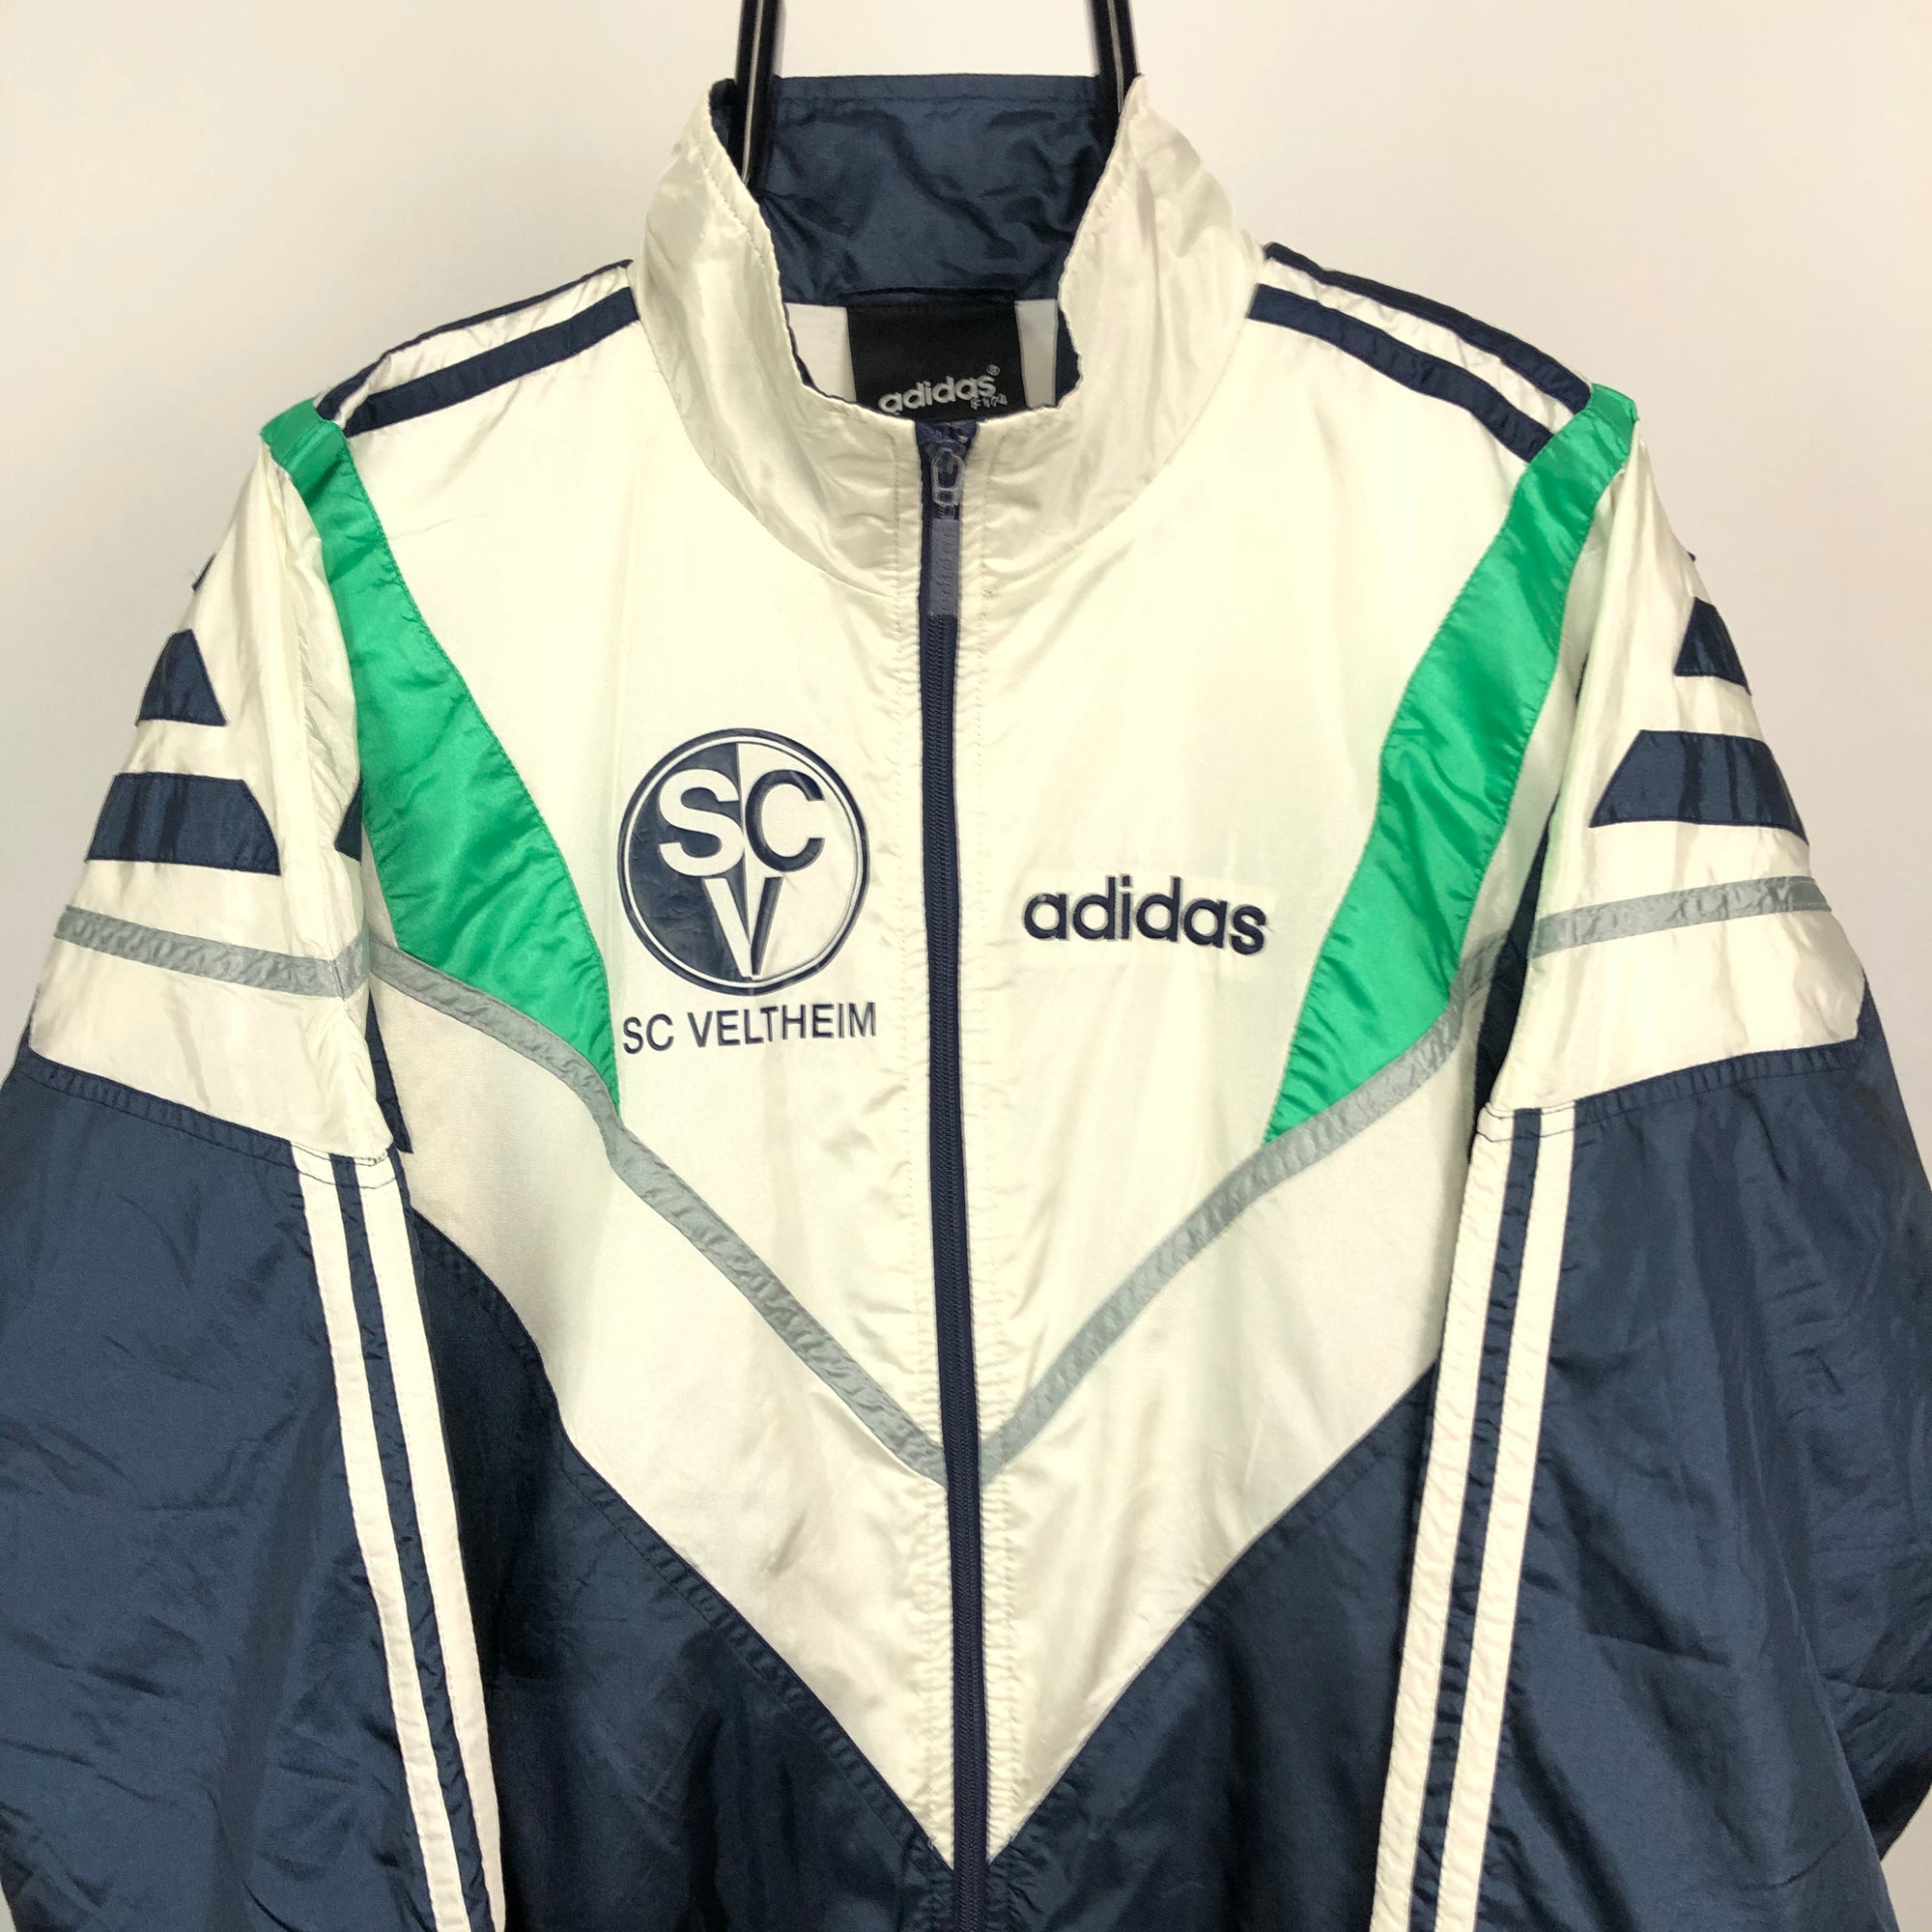 Vintage 80s Adidas Shell Jacket - Men's Medium/Women's Large